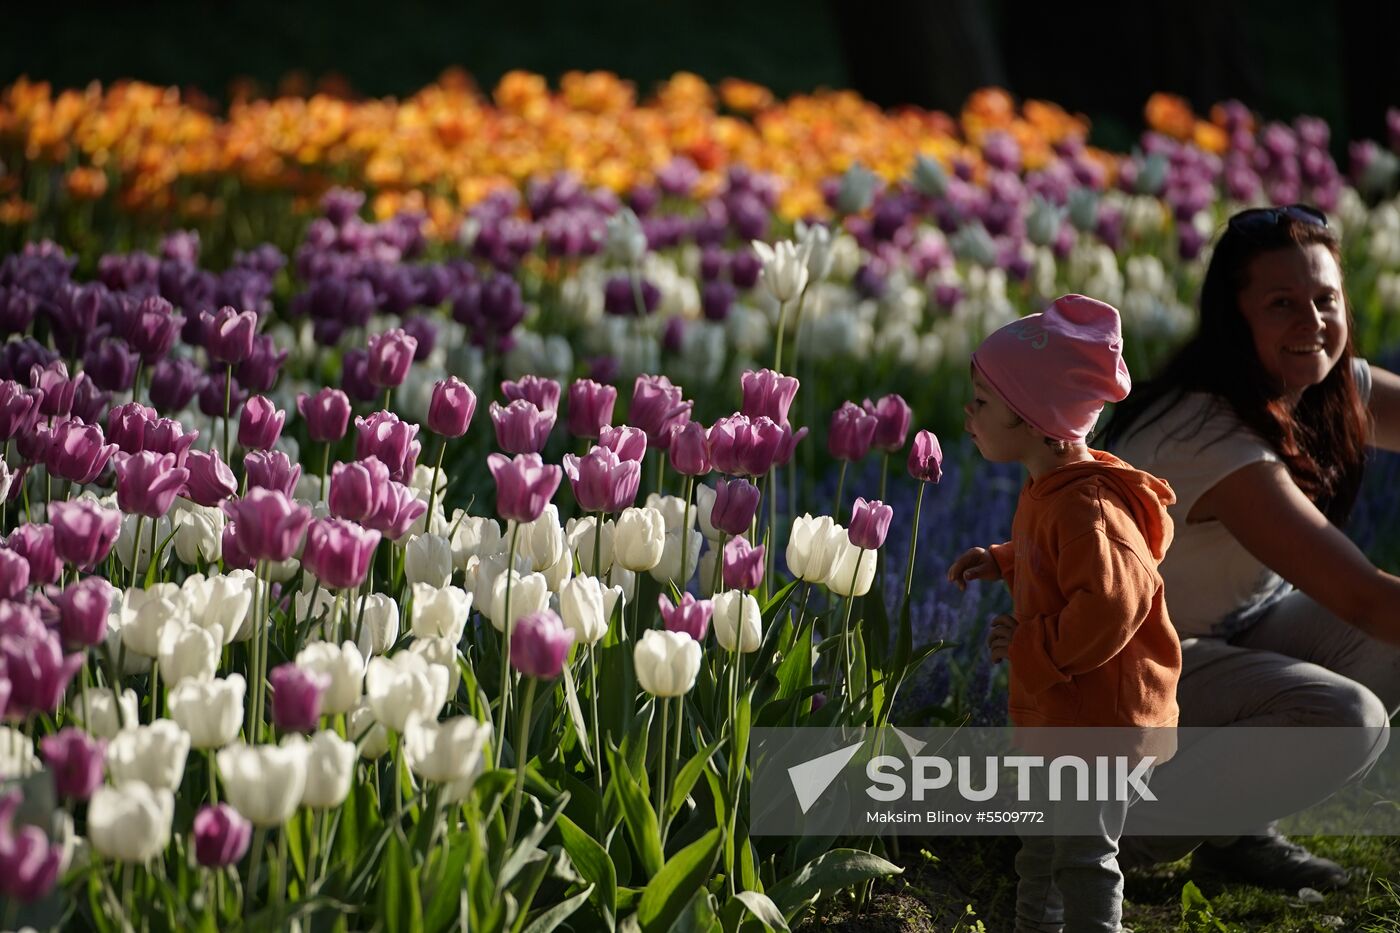 Tulip Festival in St. Petersburg